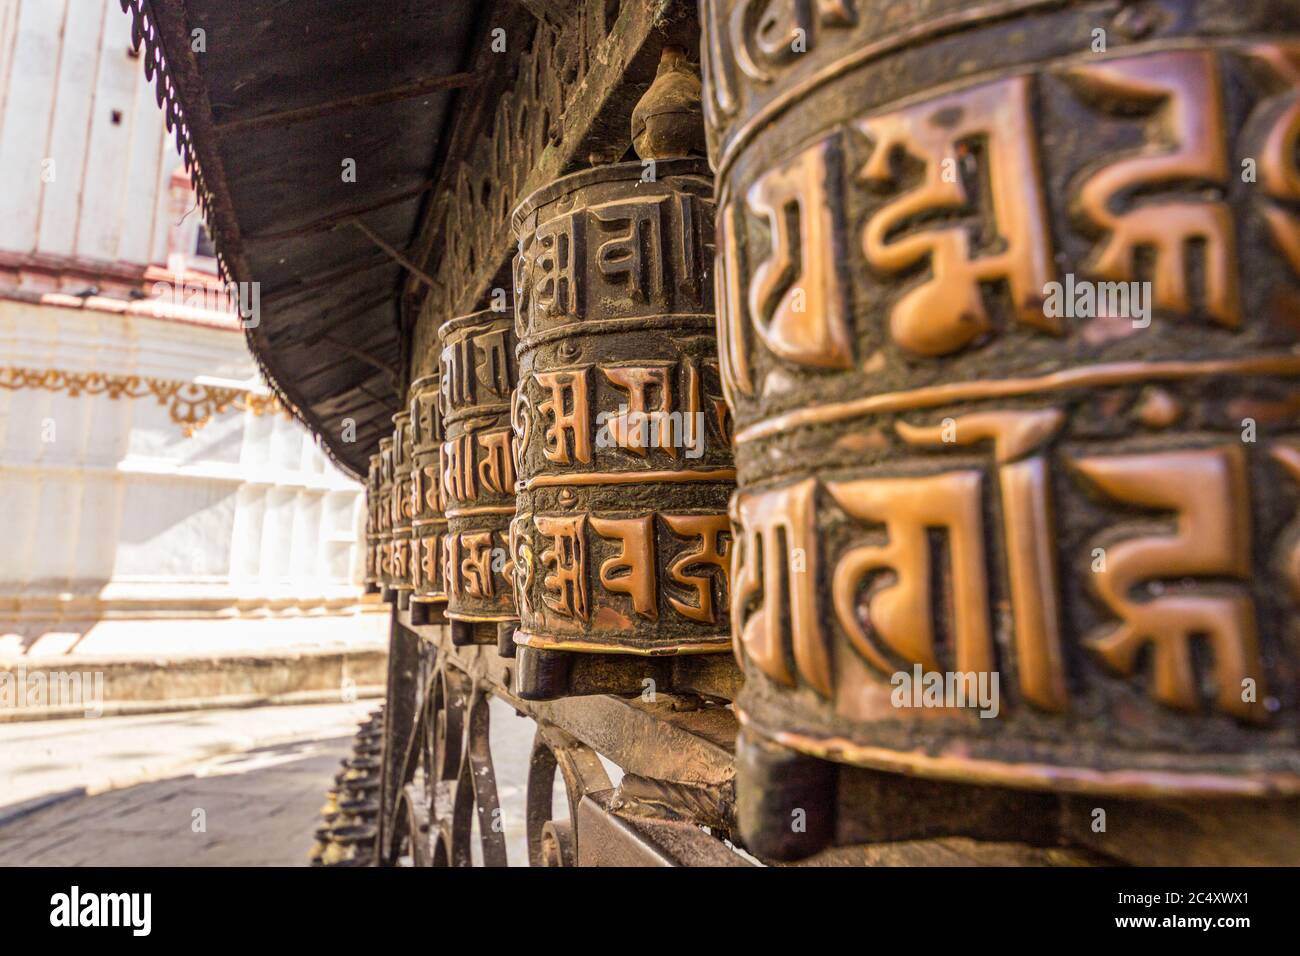 Tibetan prayer wheels or prayer's rolls of the faithful Buddhists. Stock Photo